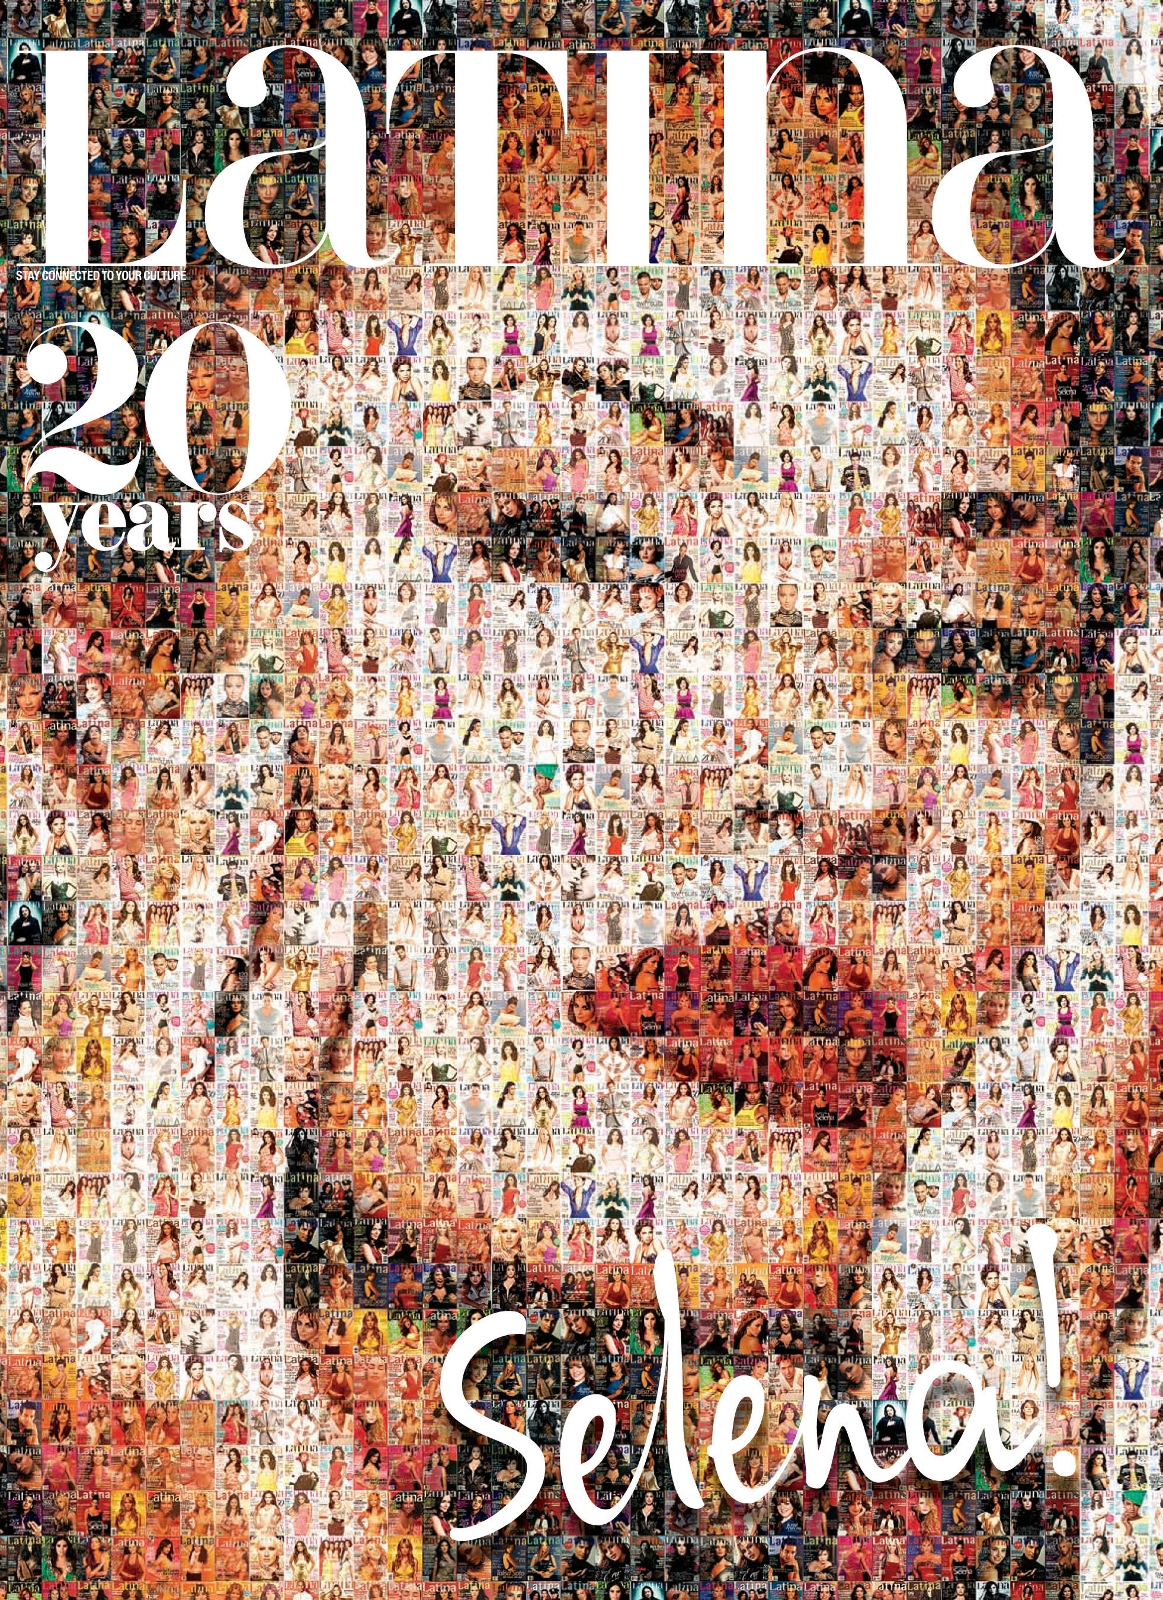 Latina Magazine celebrates its platinum anniversary with a photomosaic of the legendary Selena Quintanilla.